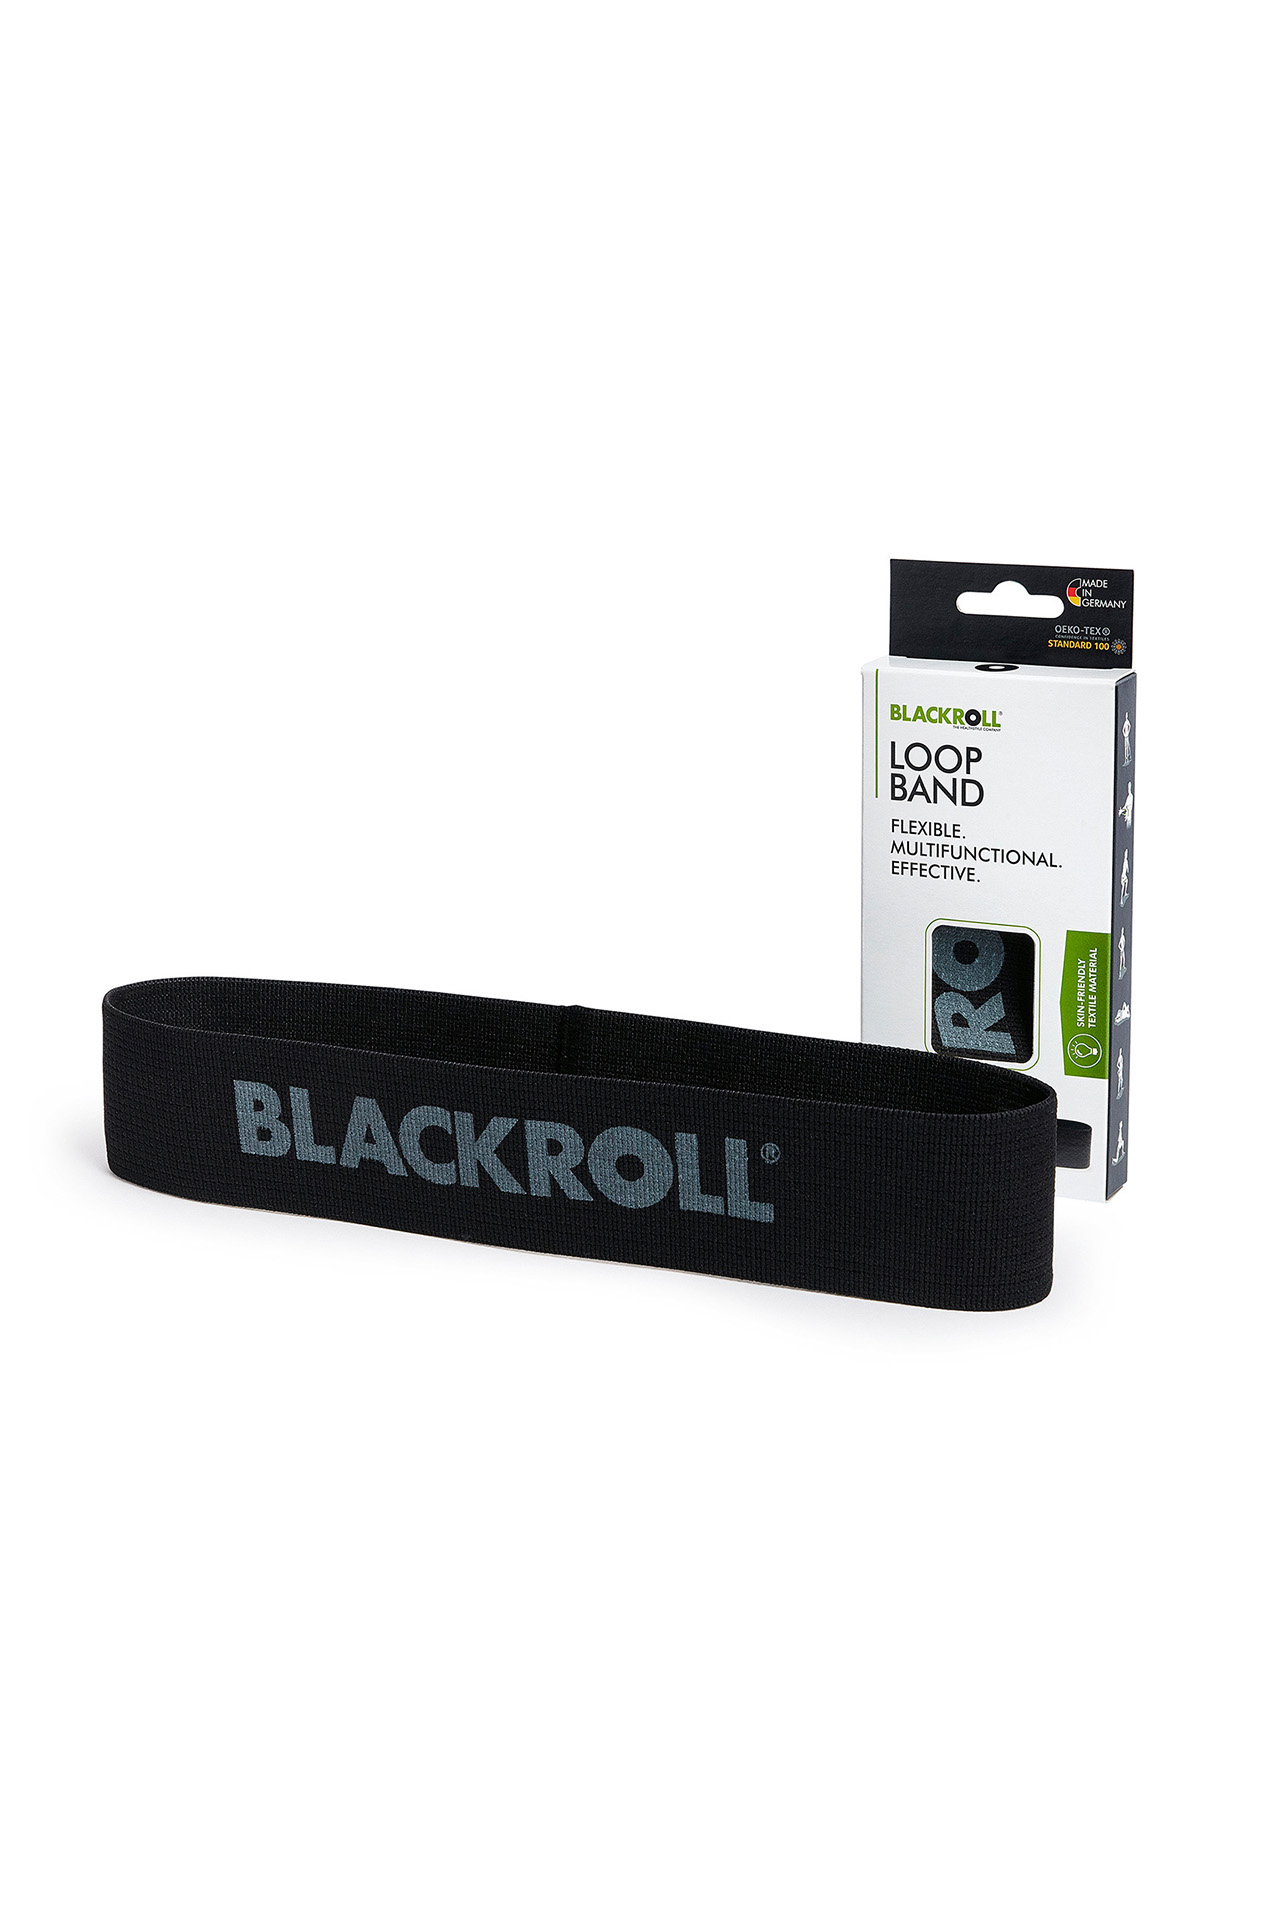 blackroll loop band black training fengbao shop 1080 wien